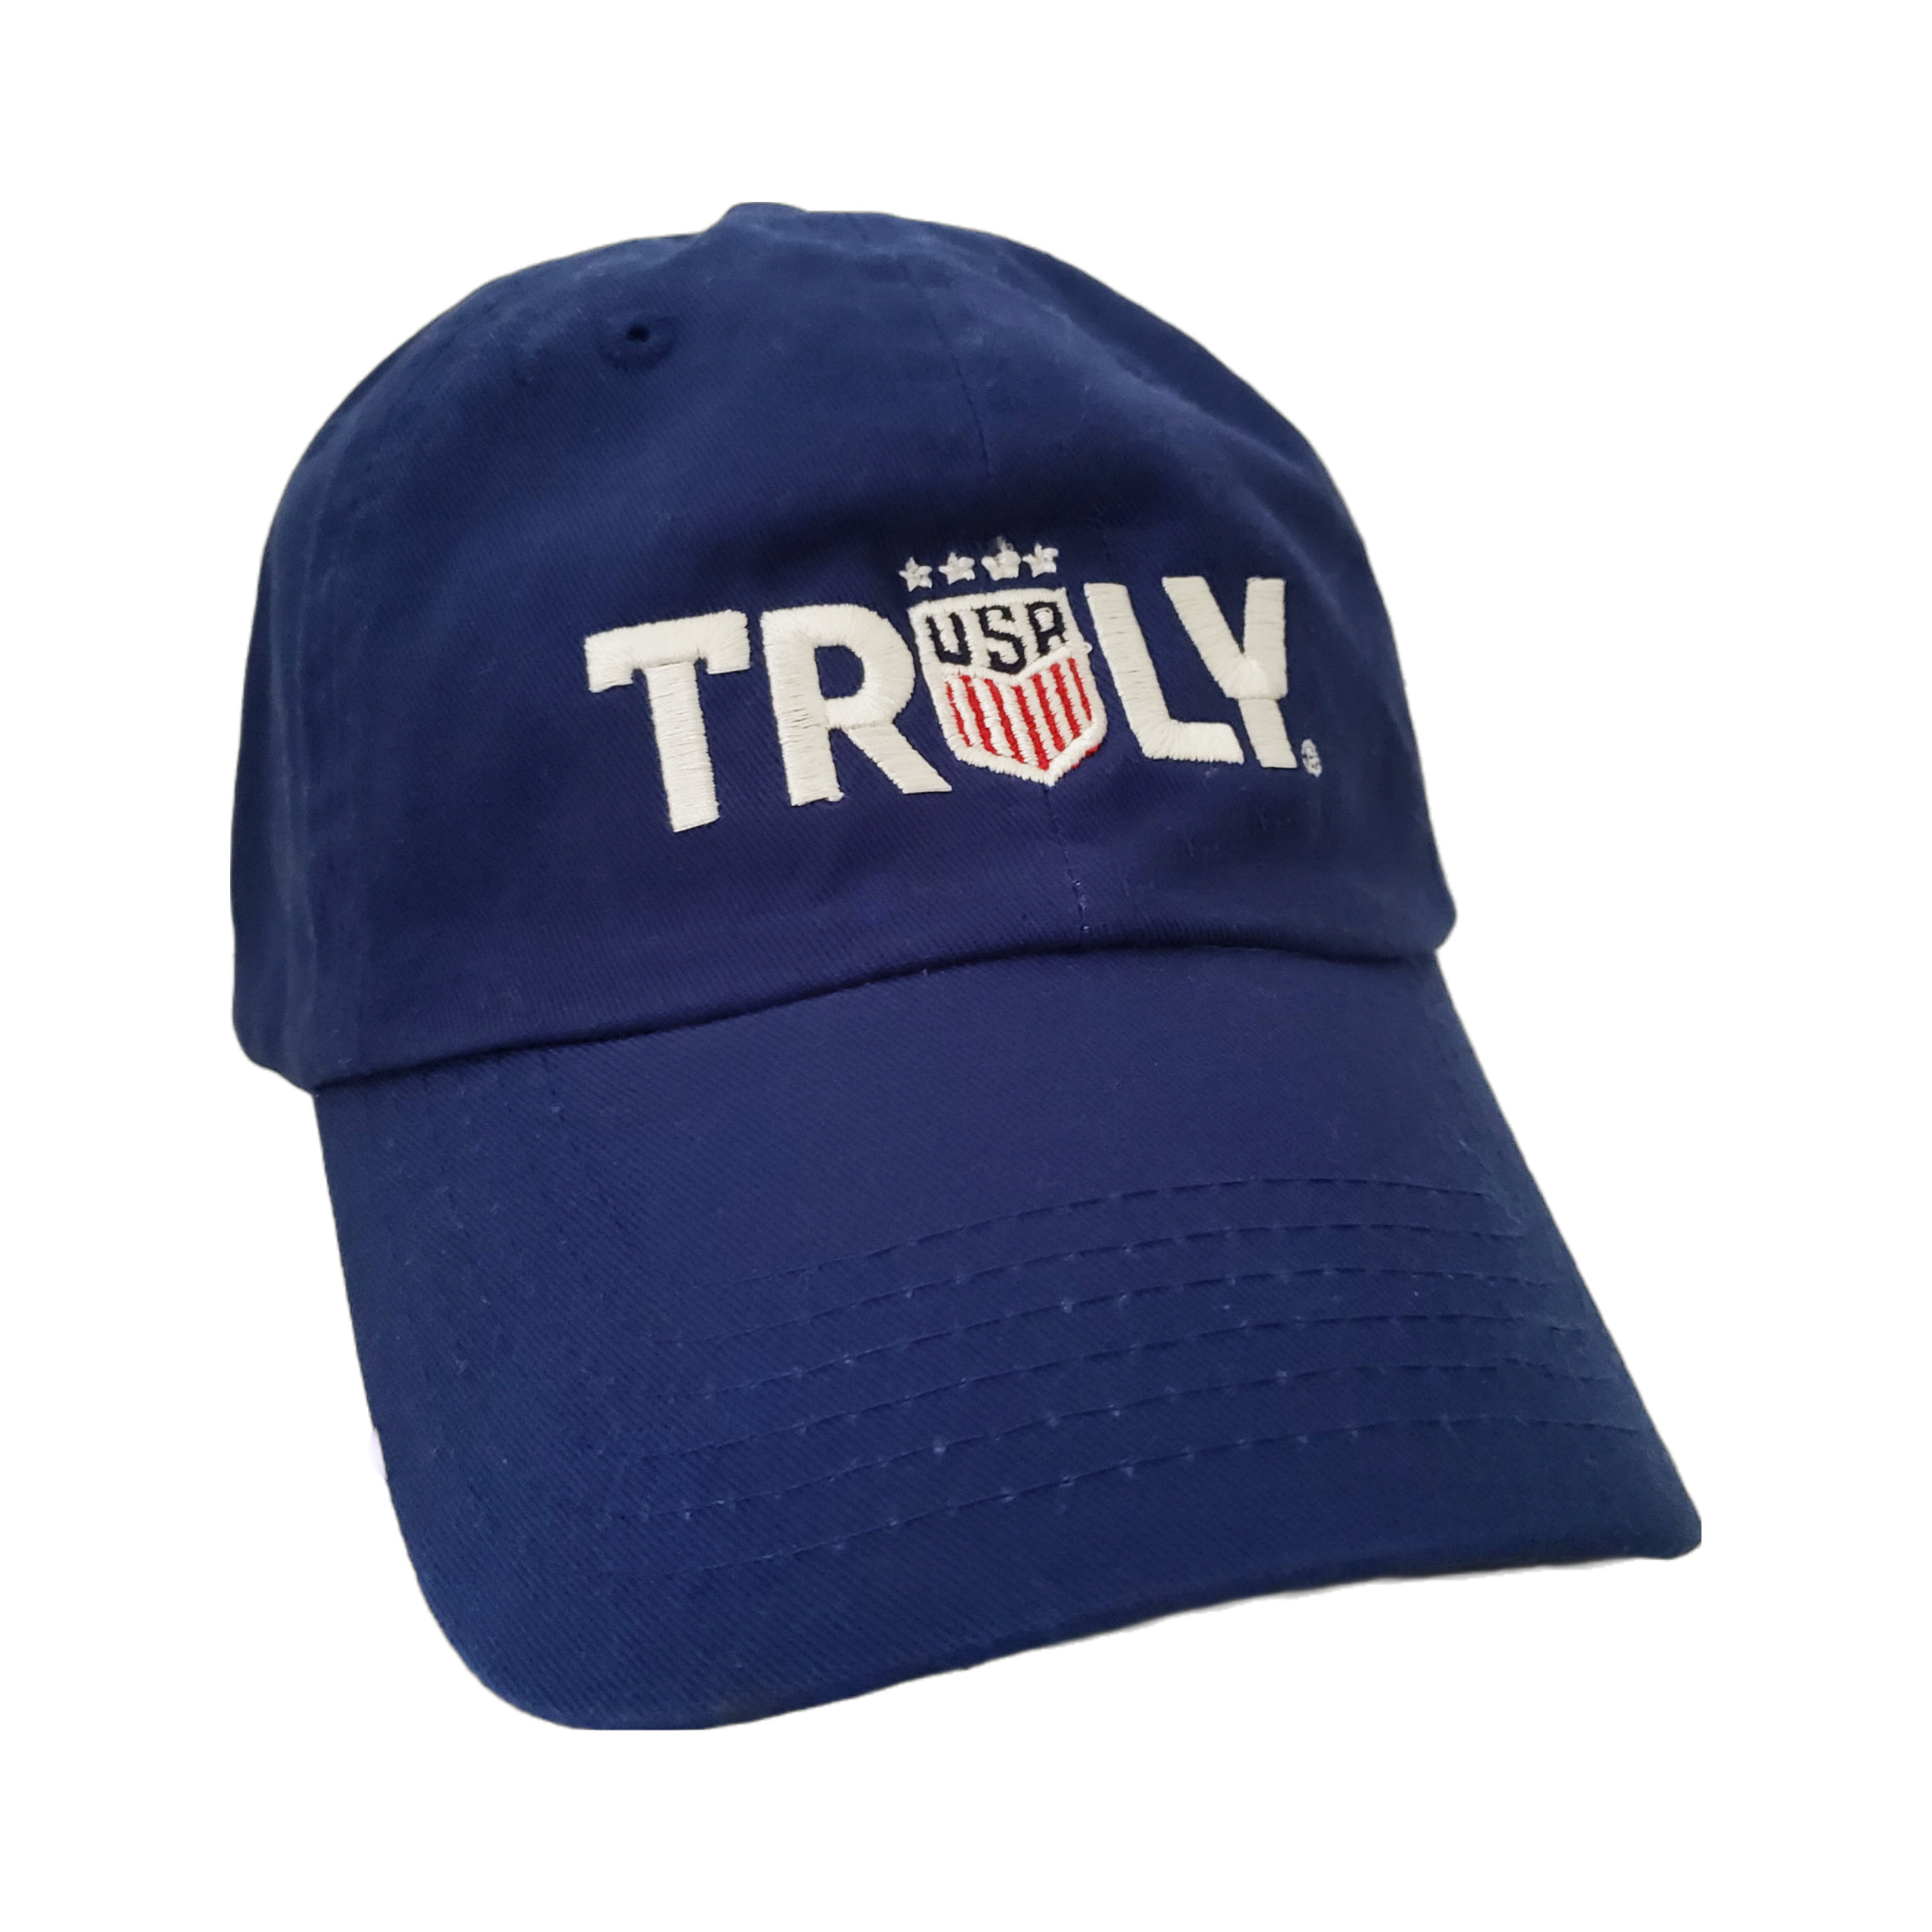 Truly-USF-hat-3